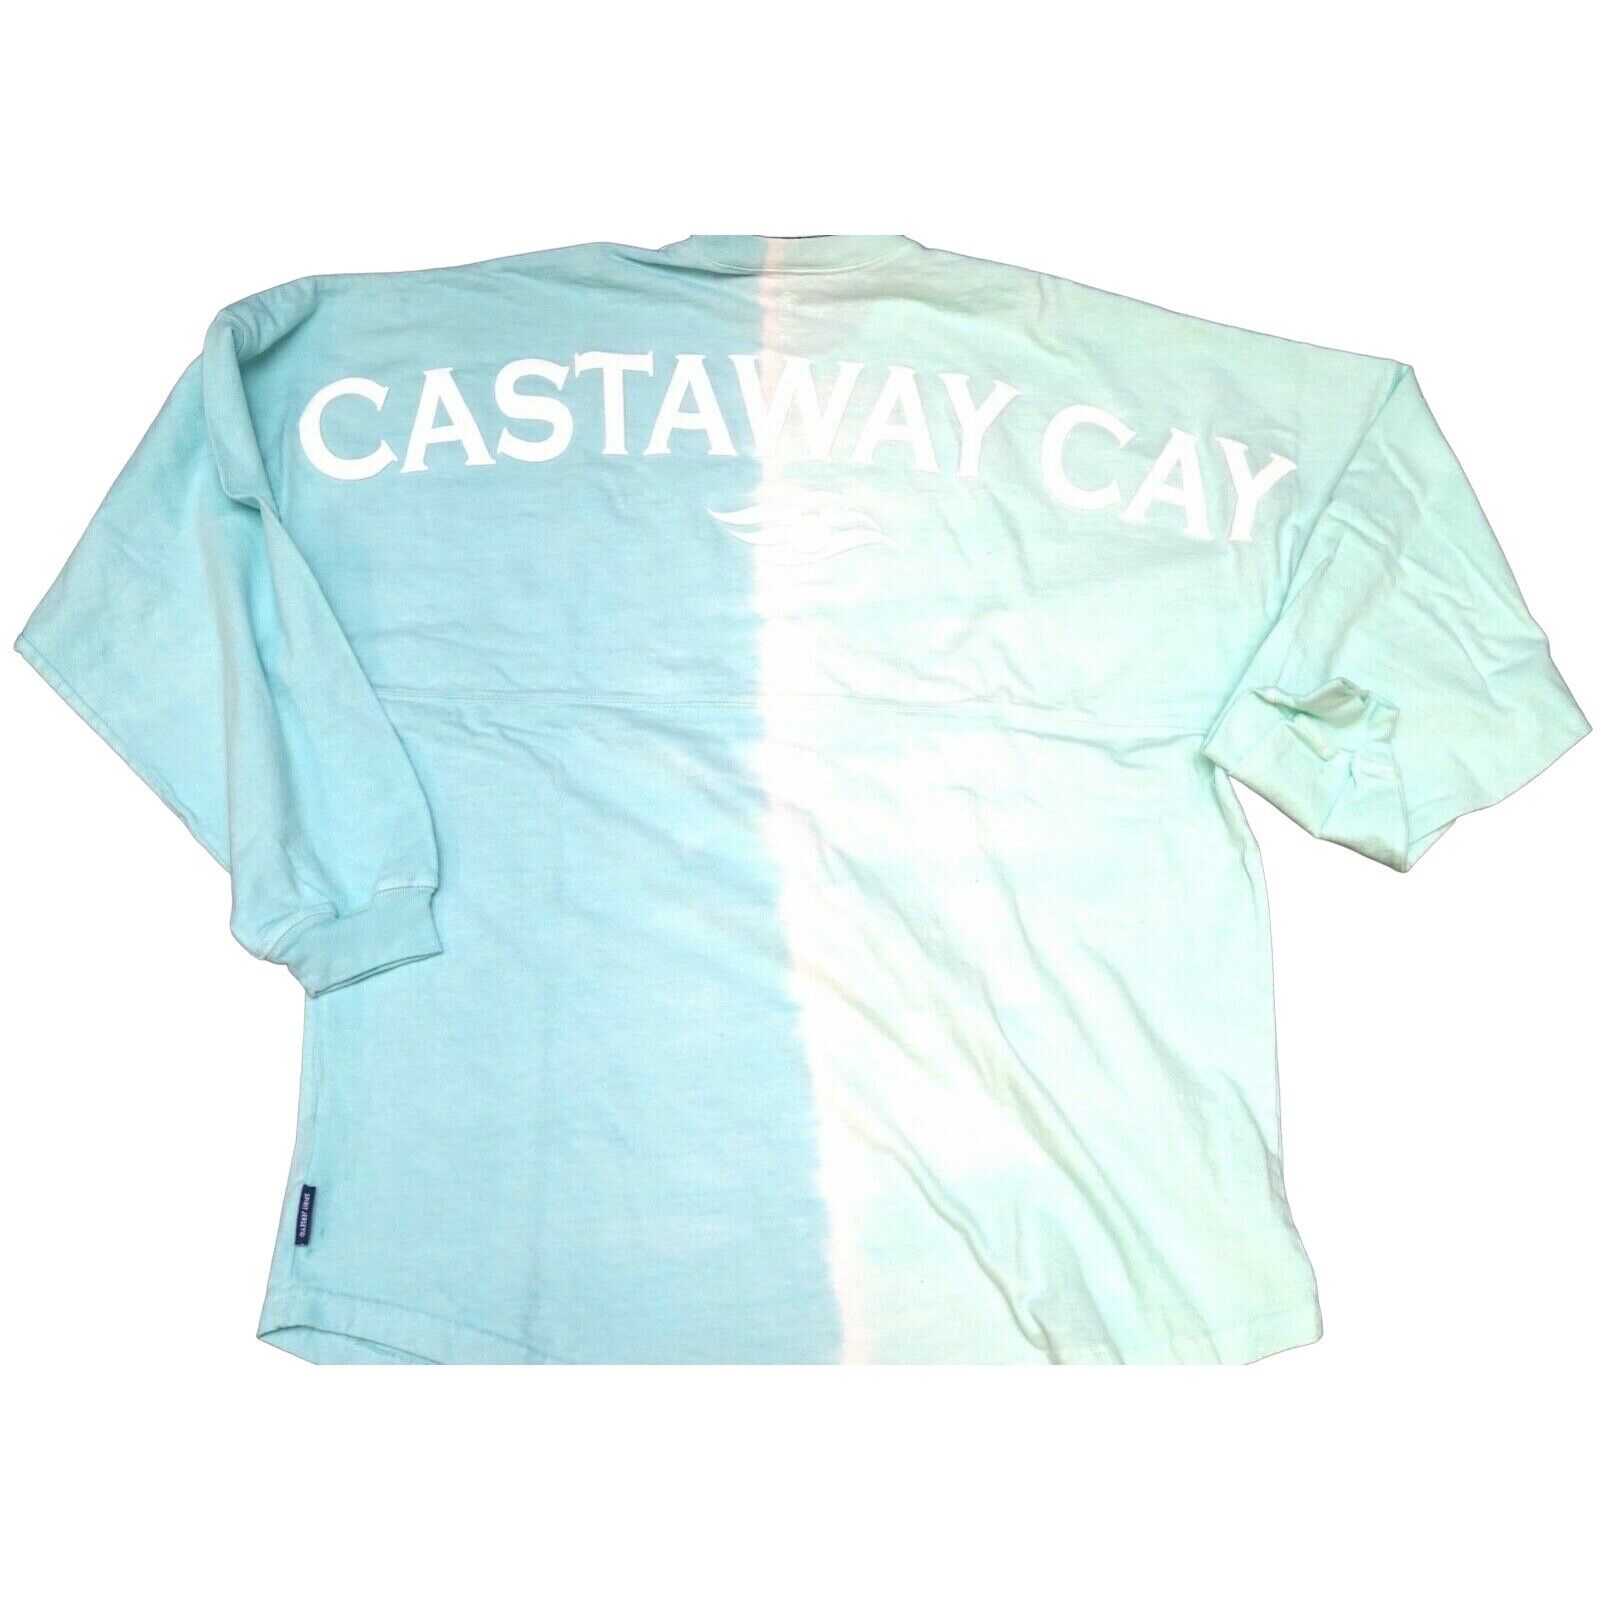 Disney Cruise Line DCL Castaway Cay Blue Tie-Dye Spirit Jersey M